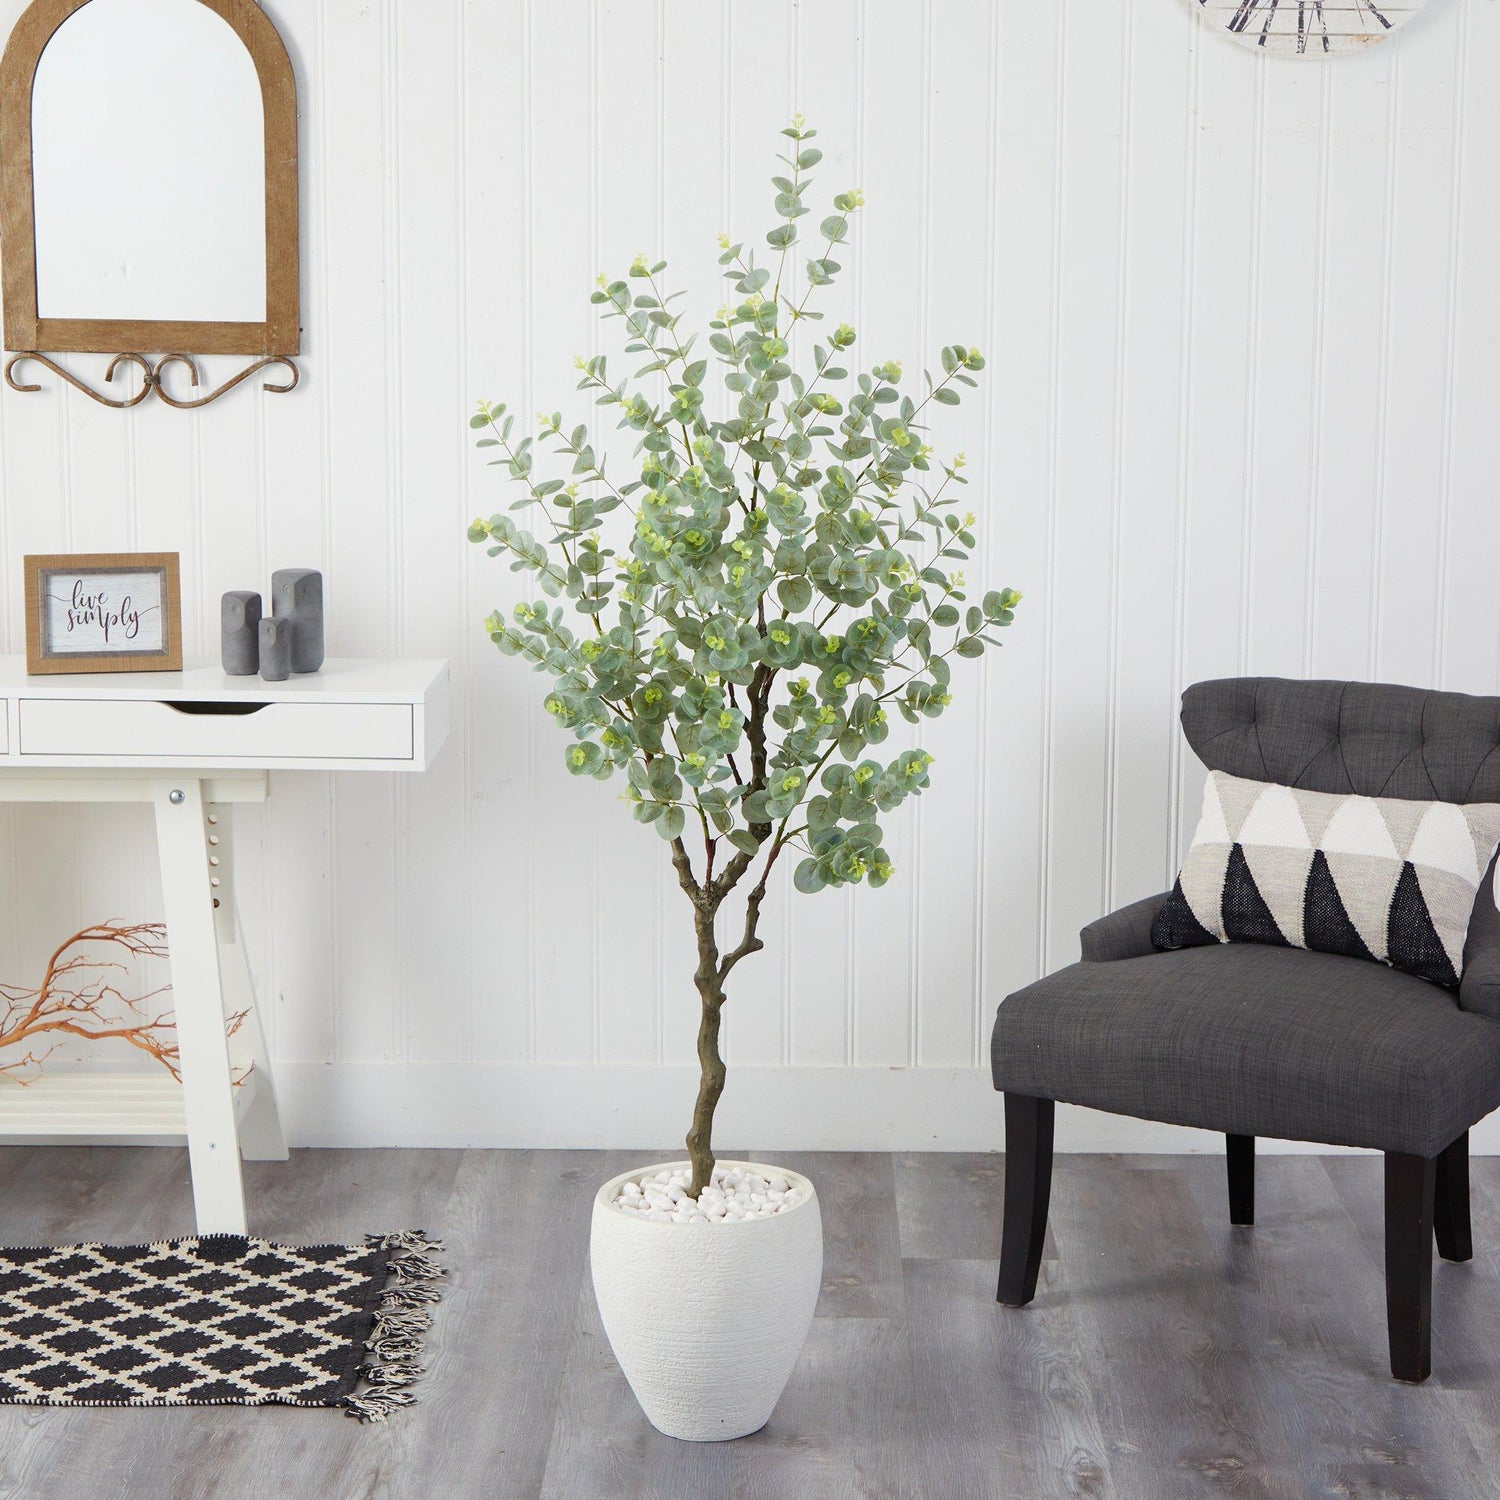 63” Eucalyptus Artificial Tree in White Planter